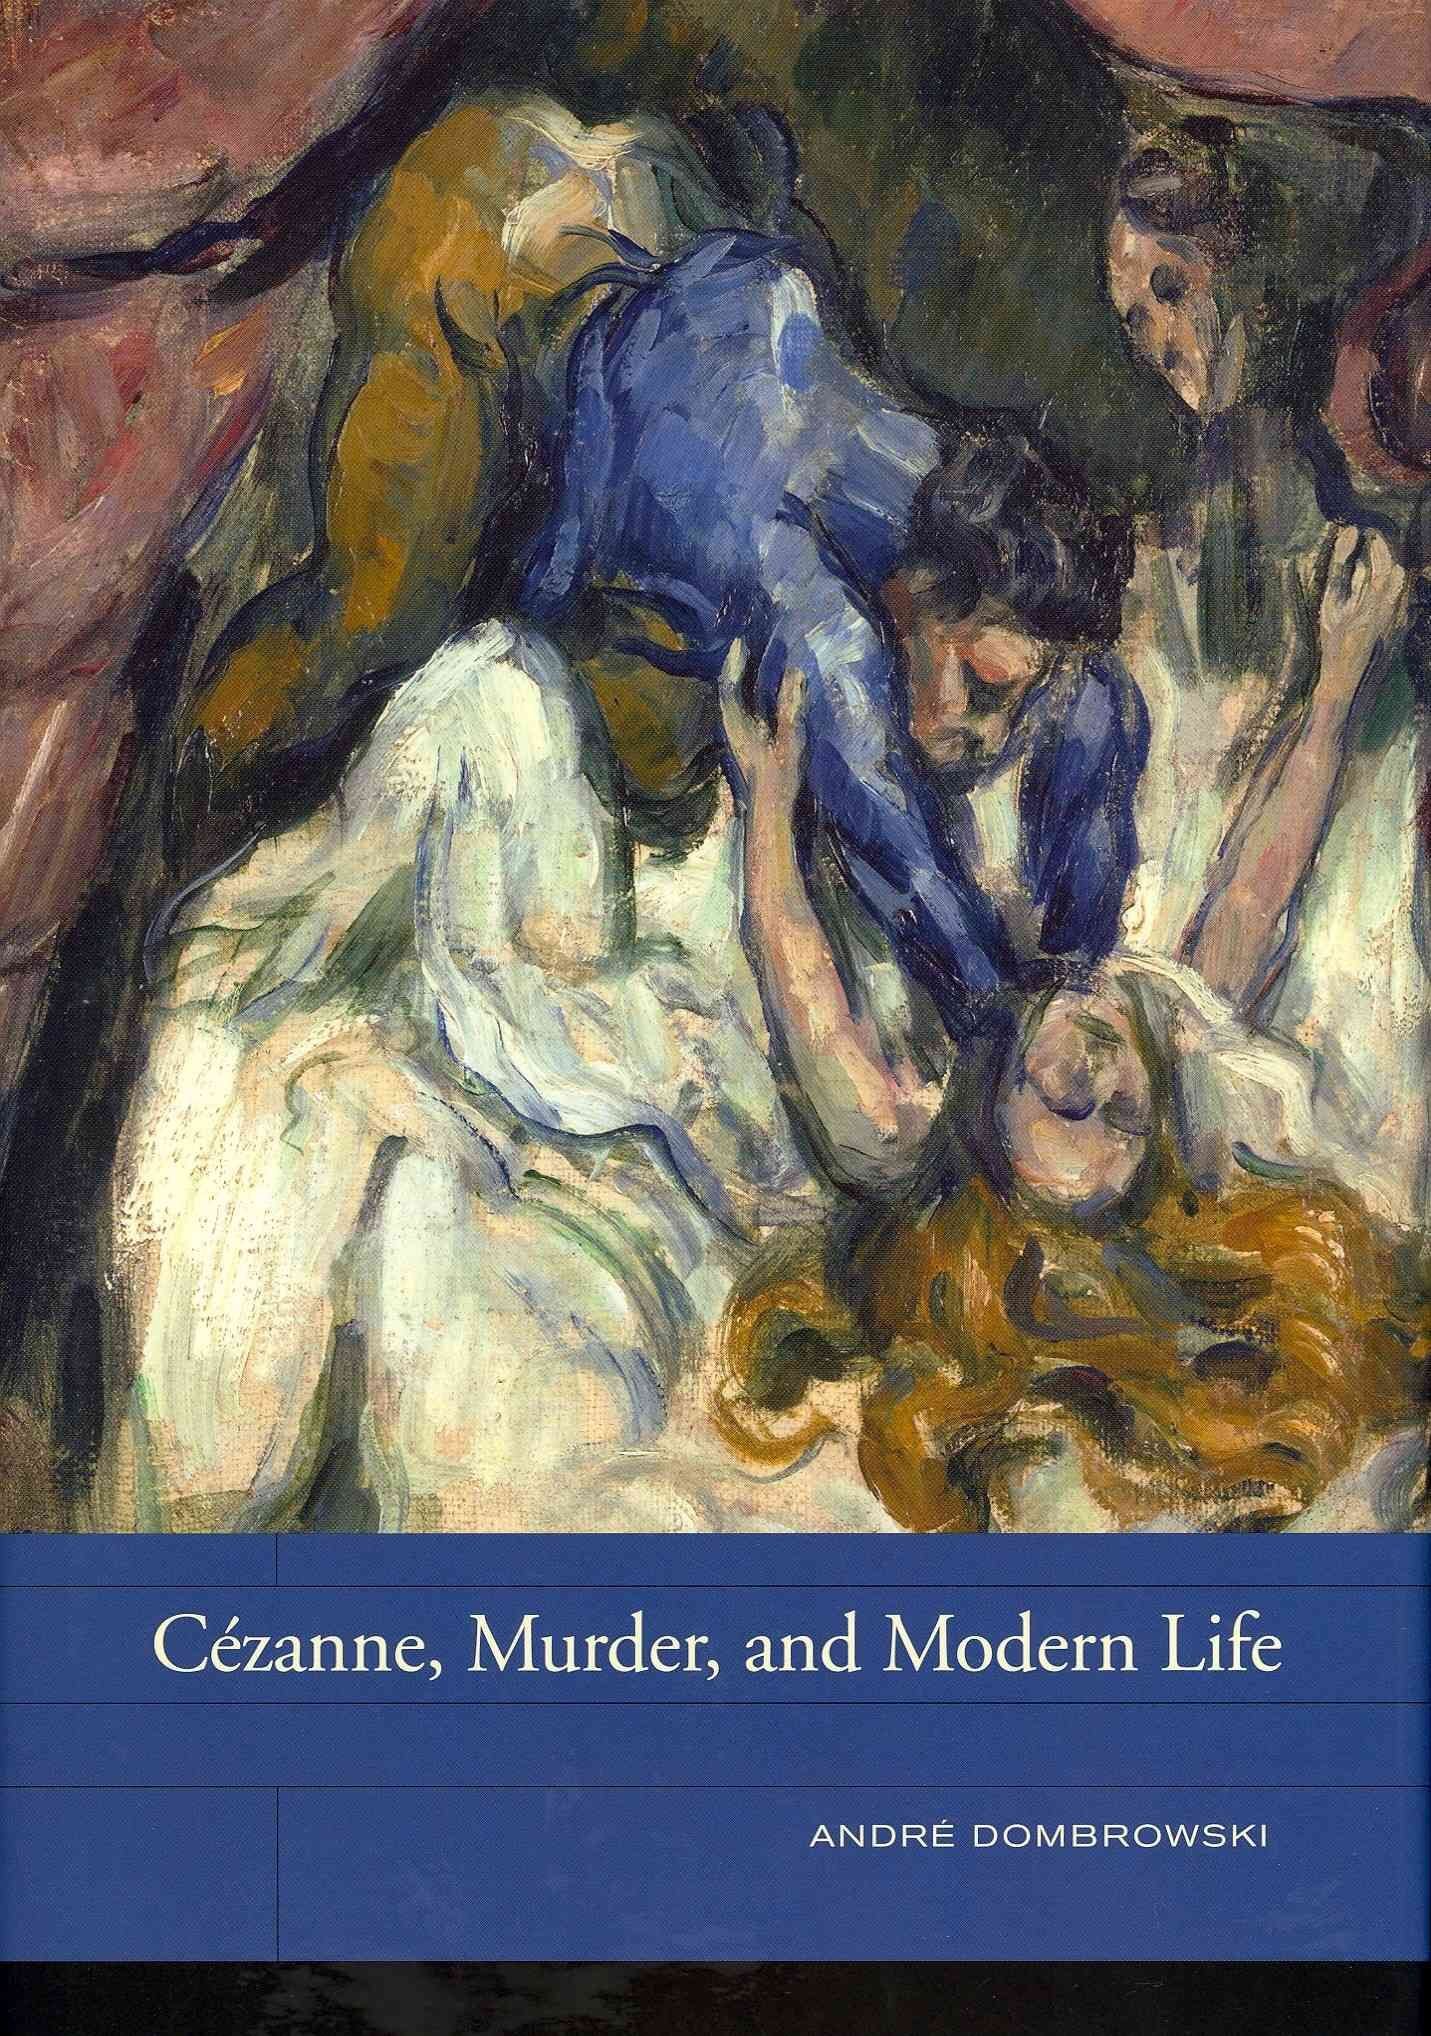 Cezanne, Murder, and Modern Life